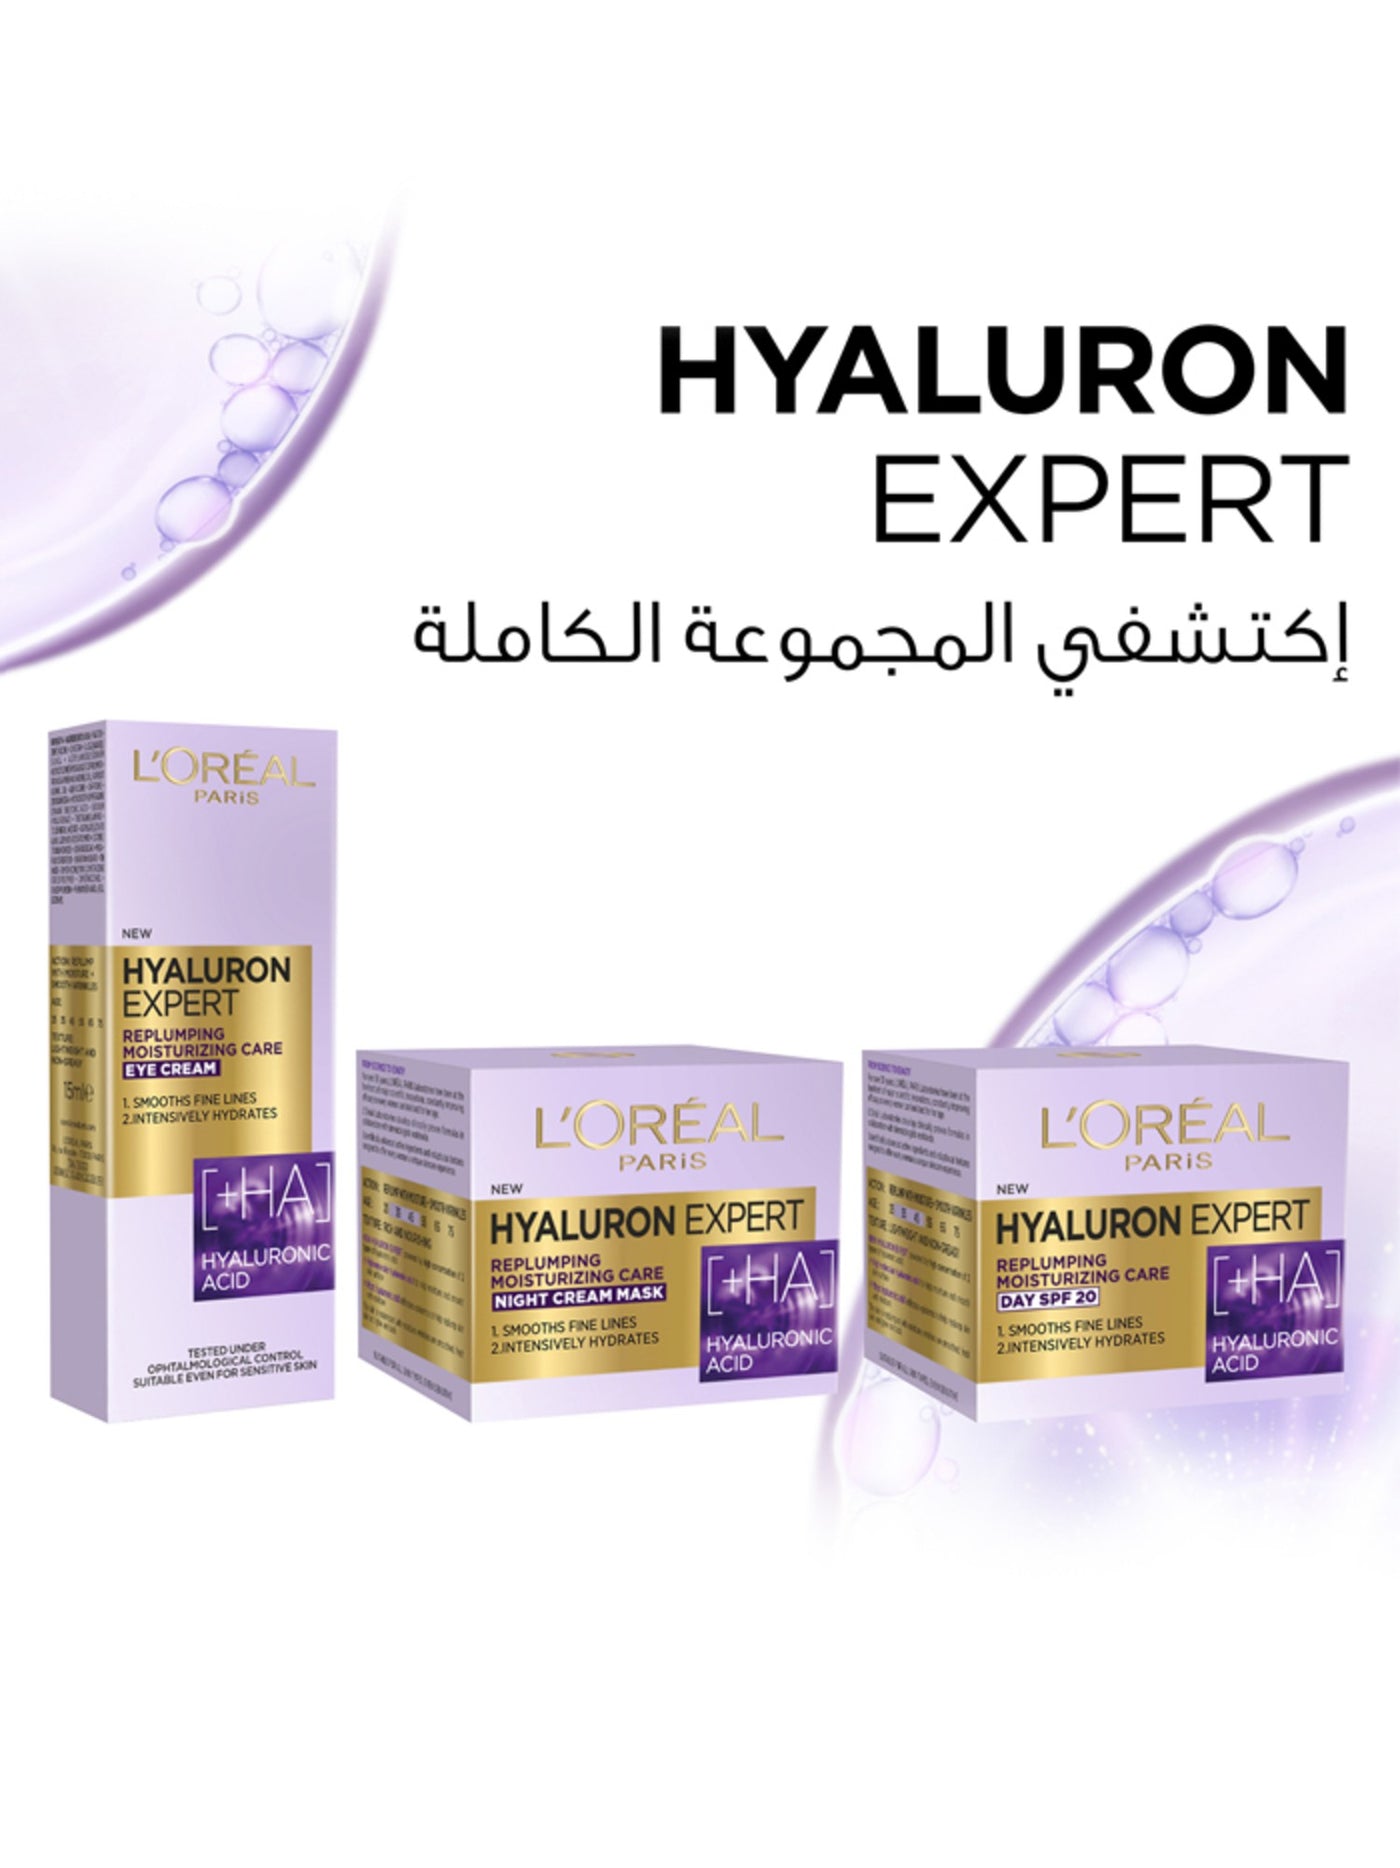 Hyaluron Expert Day Cream